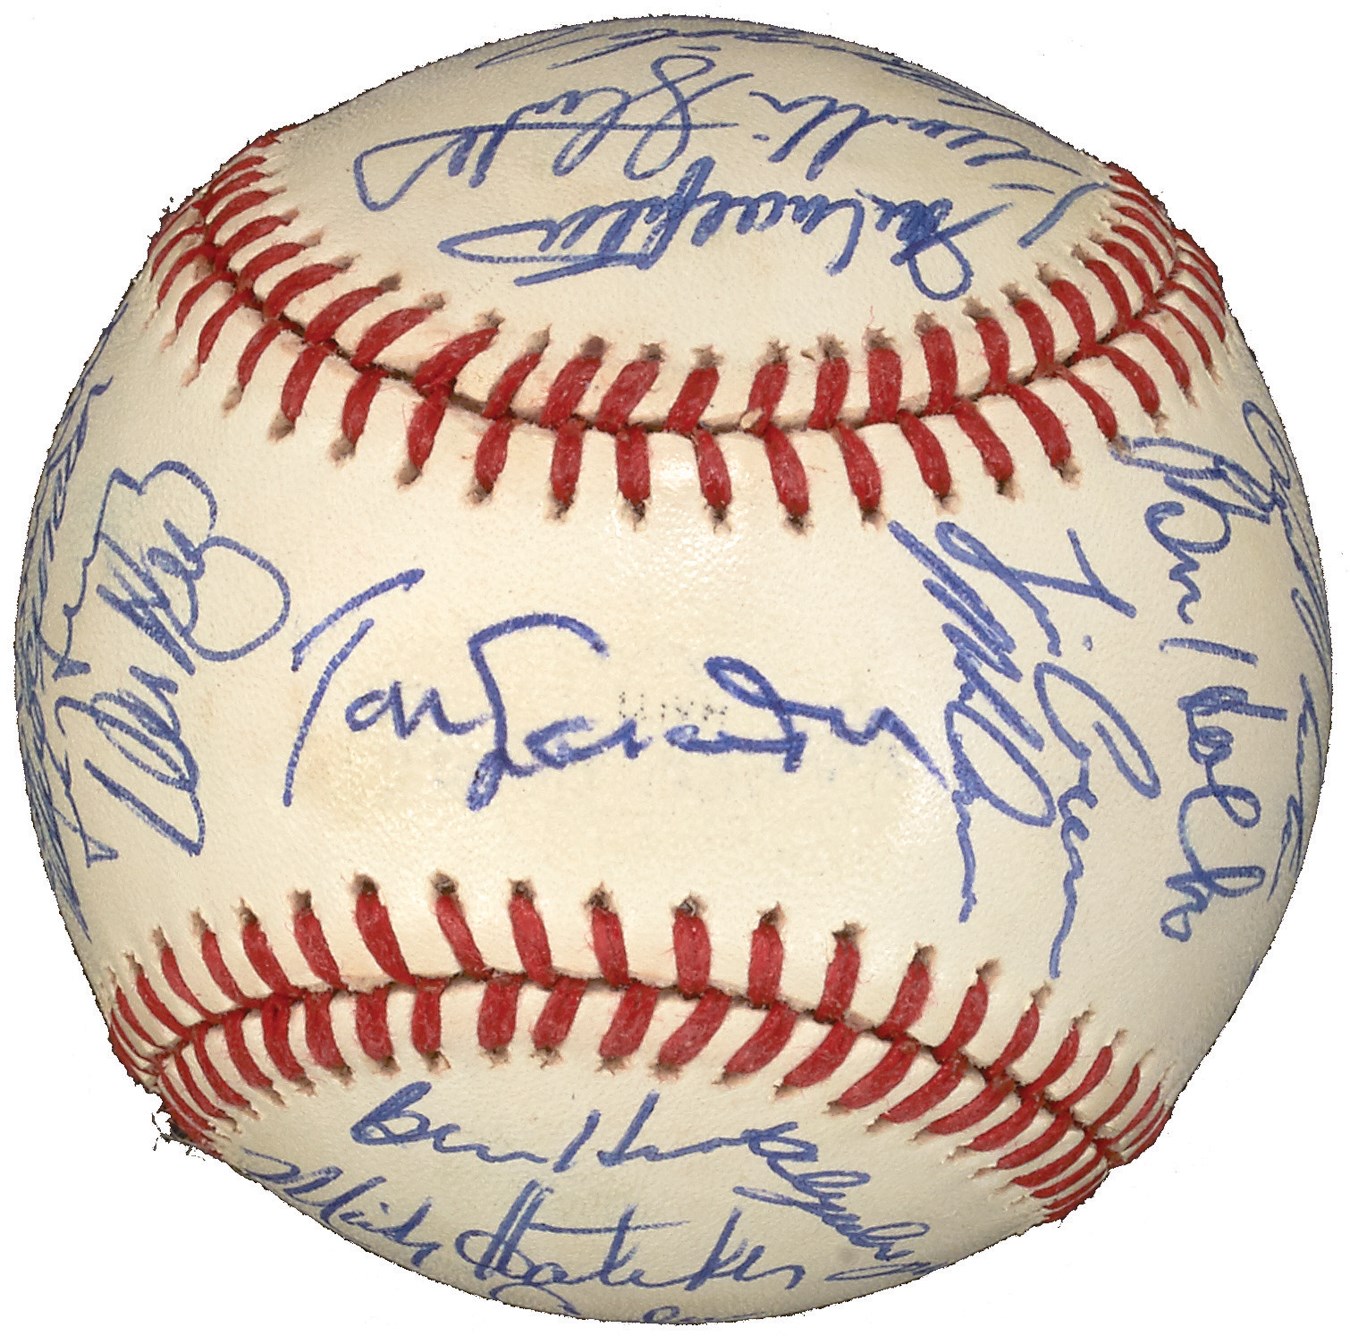 - High Grade 1988 Los Angeles Dodgers World Champions Team-Signed Baseball